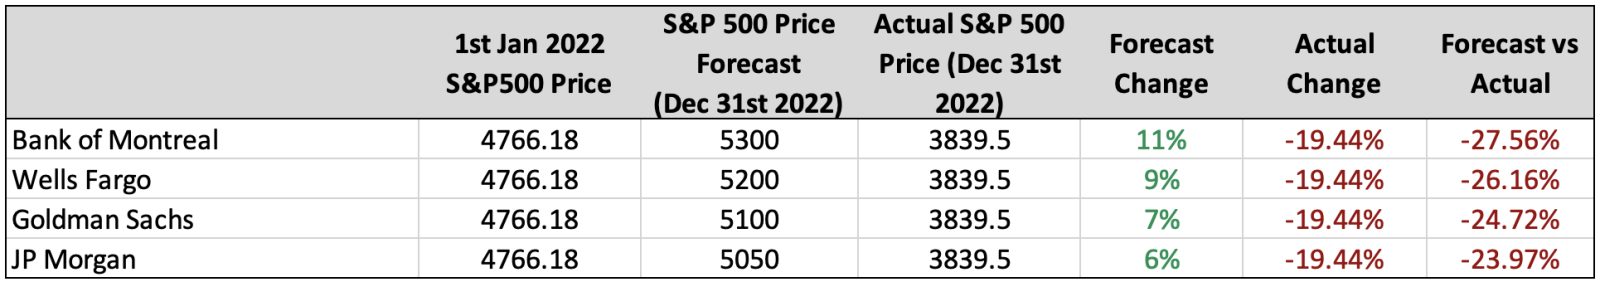 S&P500 Forecasts